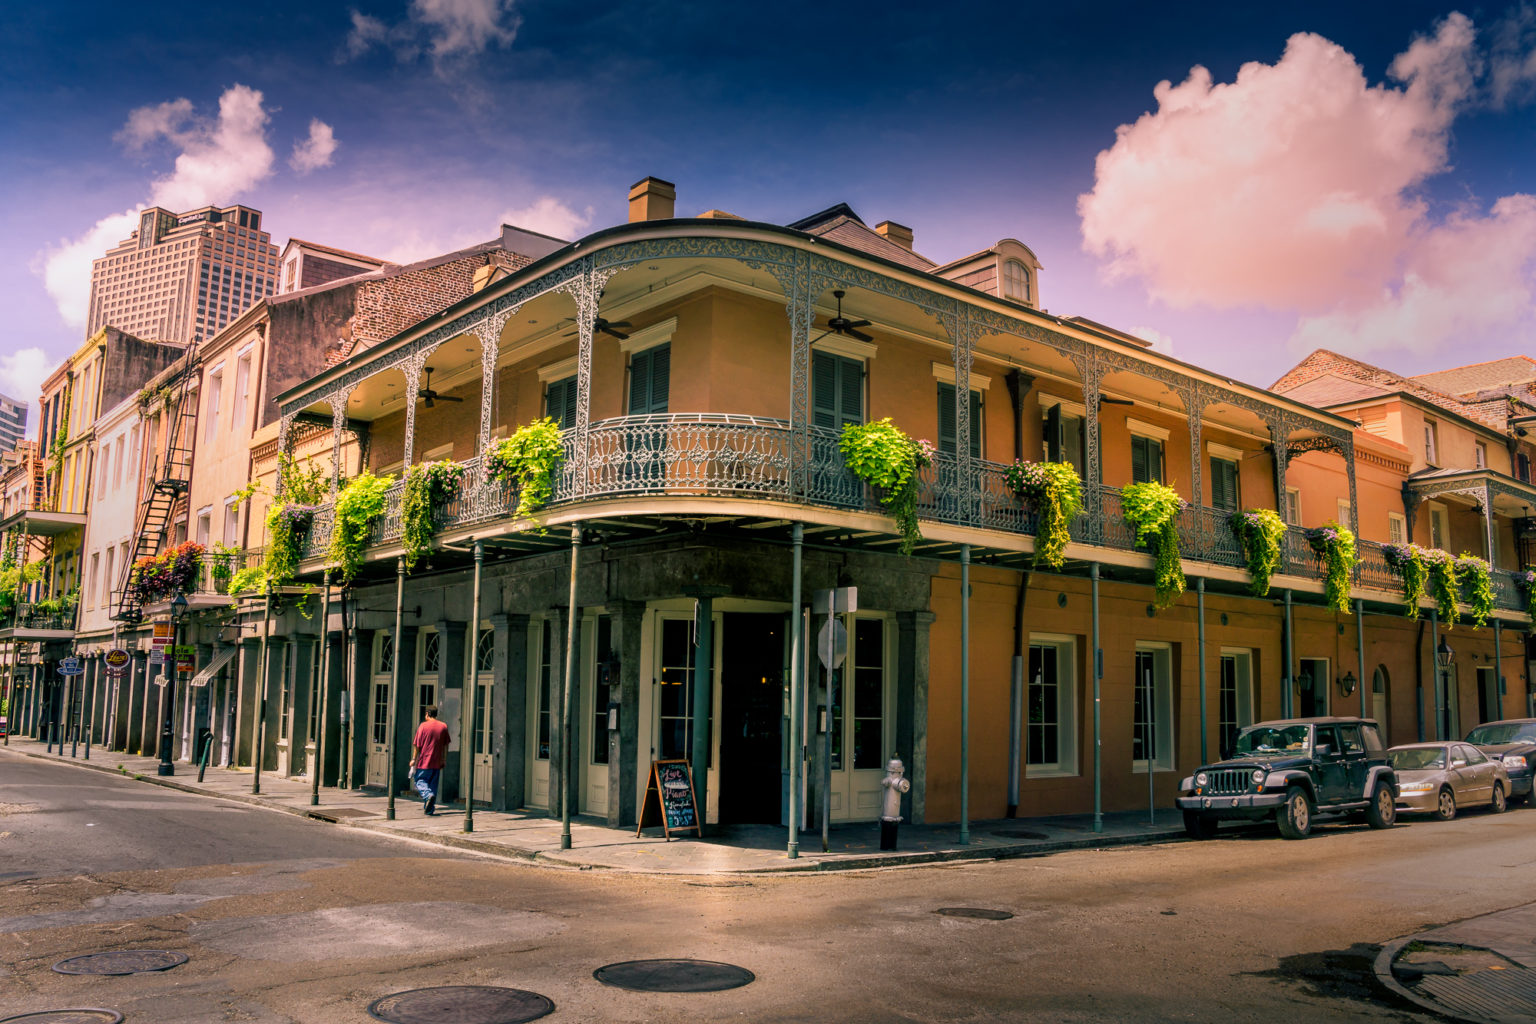 French Quarter, New Orleans, USA.